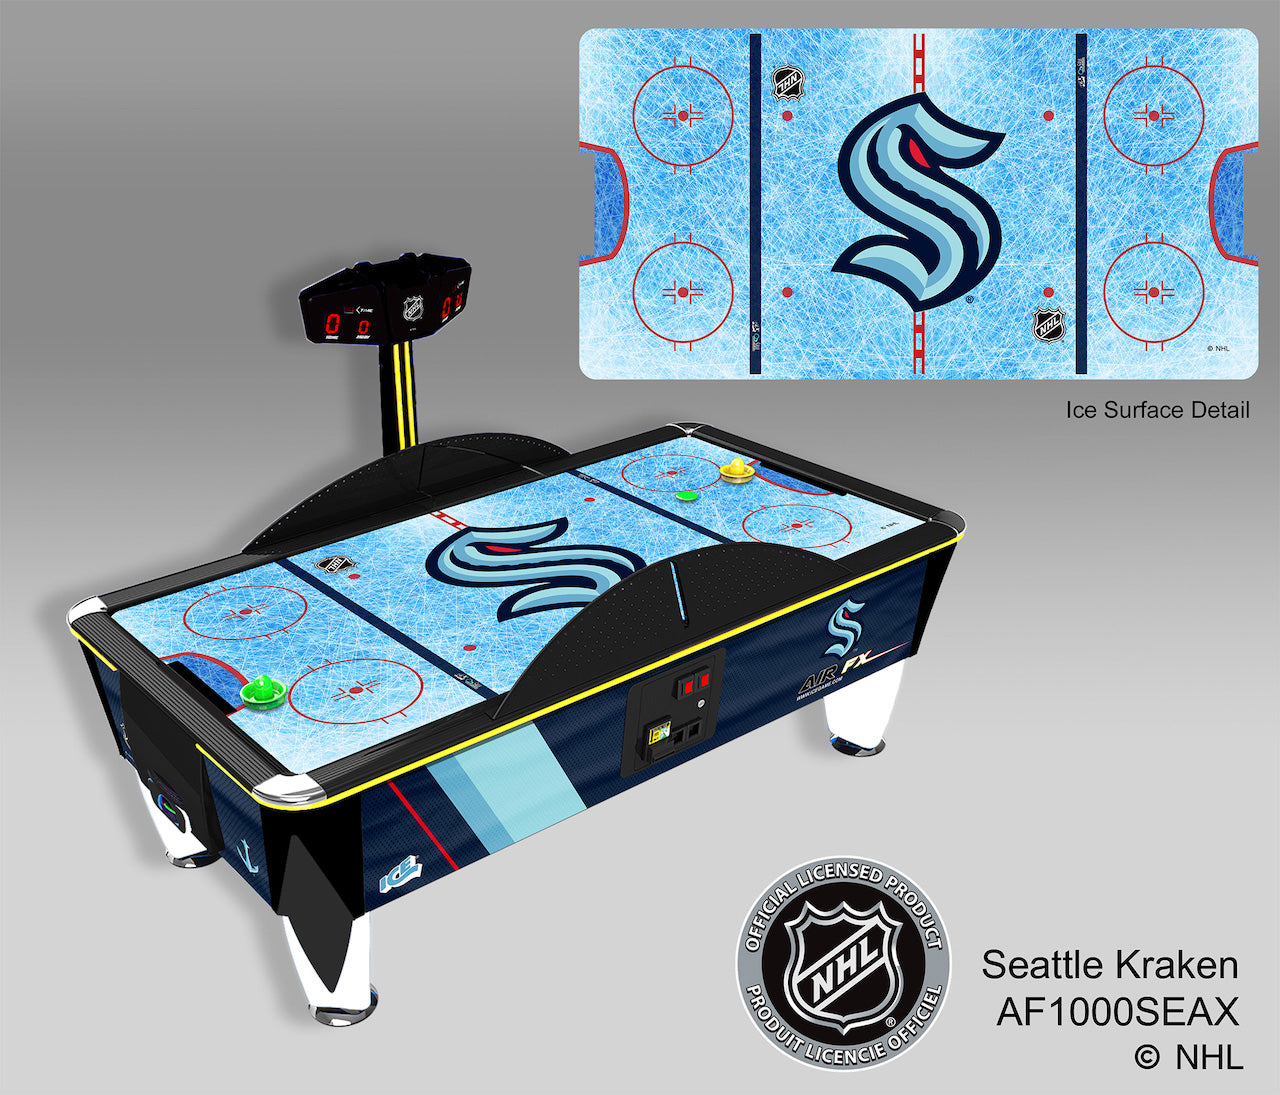 ICE NHL AIR FX Air Hockey Table (Coin) 8'